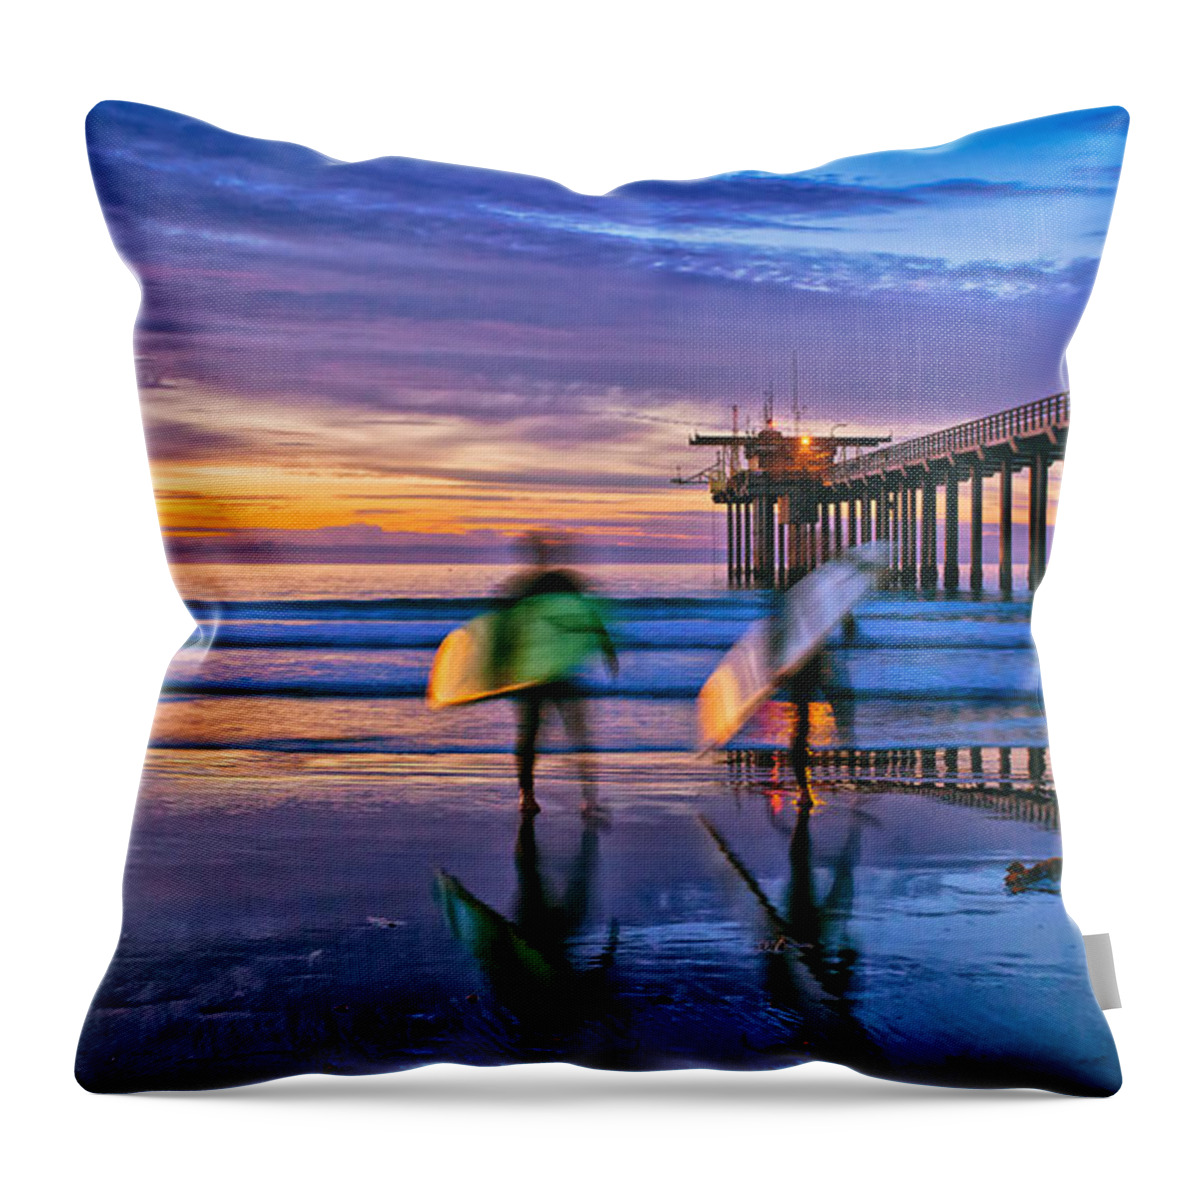 La Jolla Throw Pillow featuring the photograph Surfers at Scripps Pier in La Jolla California by Sam Antonio